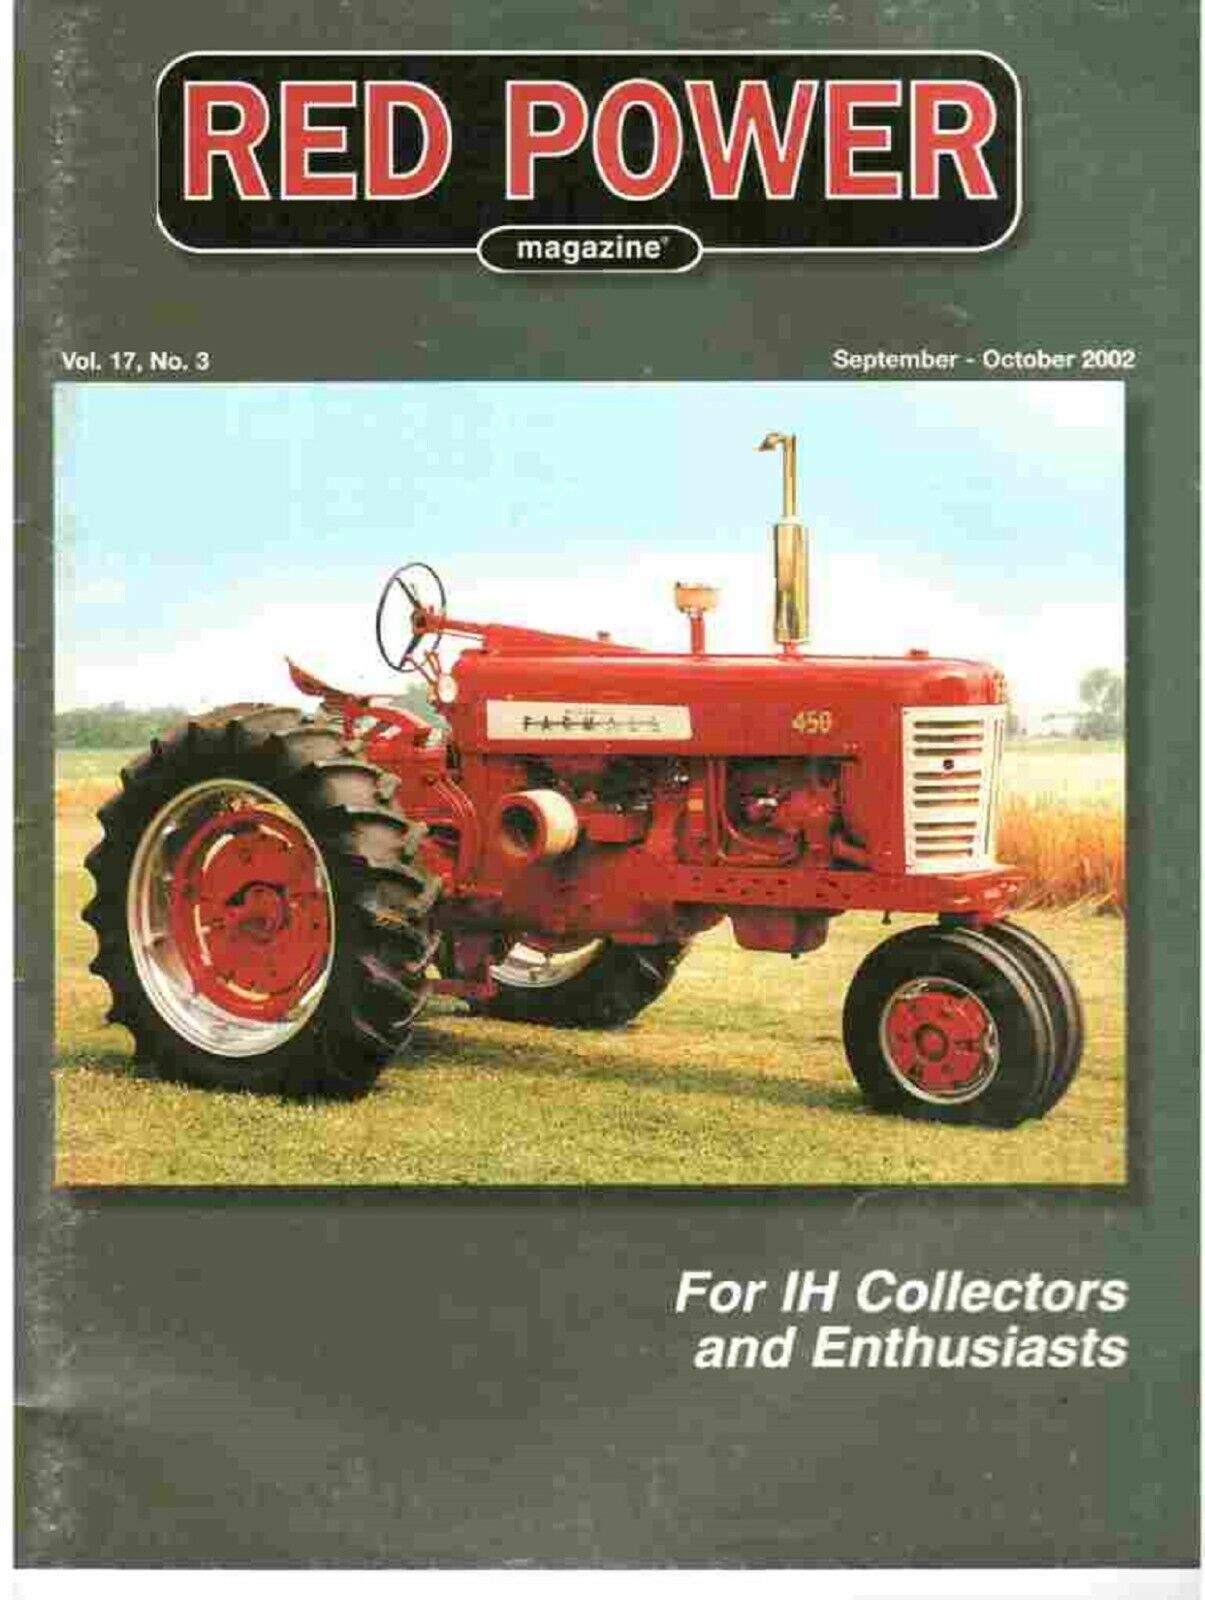 Farmall 504 tractor, Russell Motor Grader, IH Combines